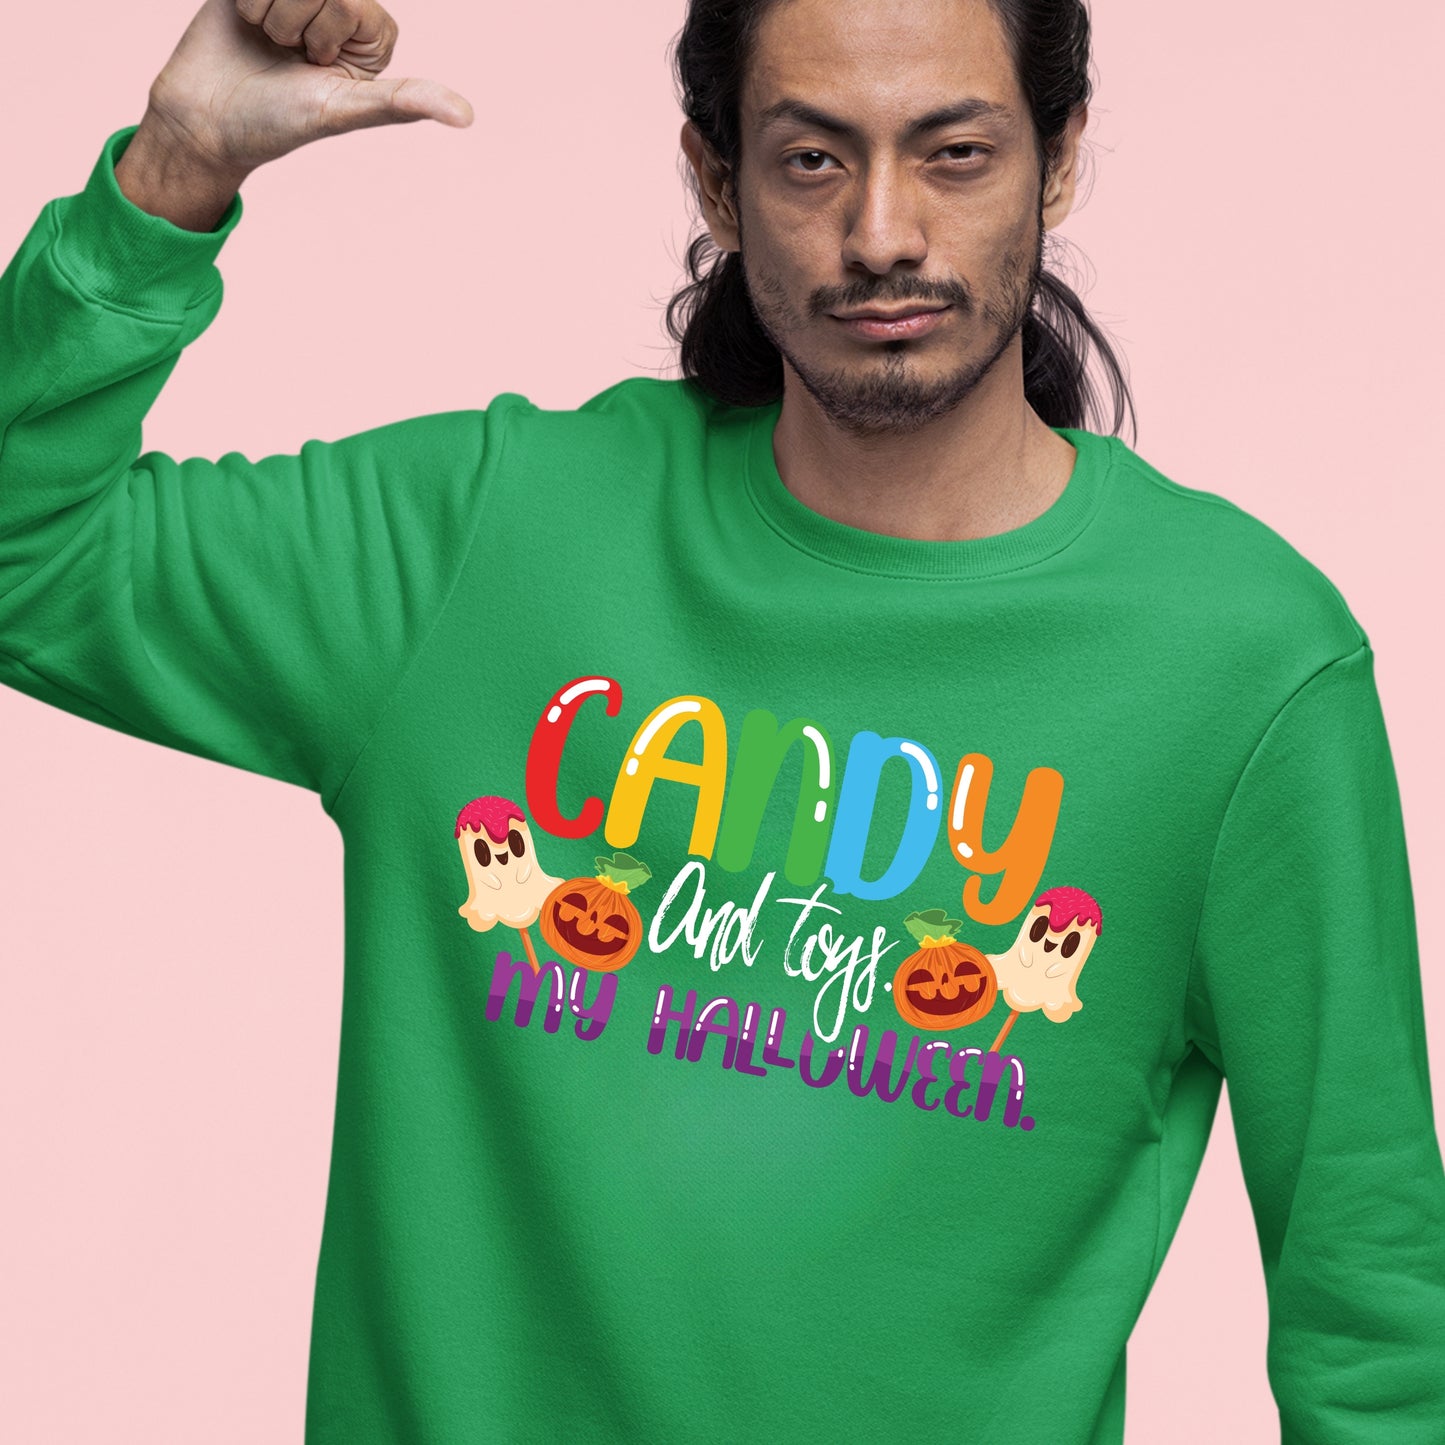 Halloween Candy and Toys Sweatshirt, Halloween Gift Sweatshirt, Halloween Sweater, Cute Halloween Sweatshirt, Funny Halloween Sweatshirt